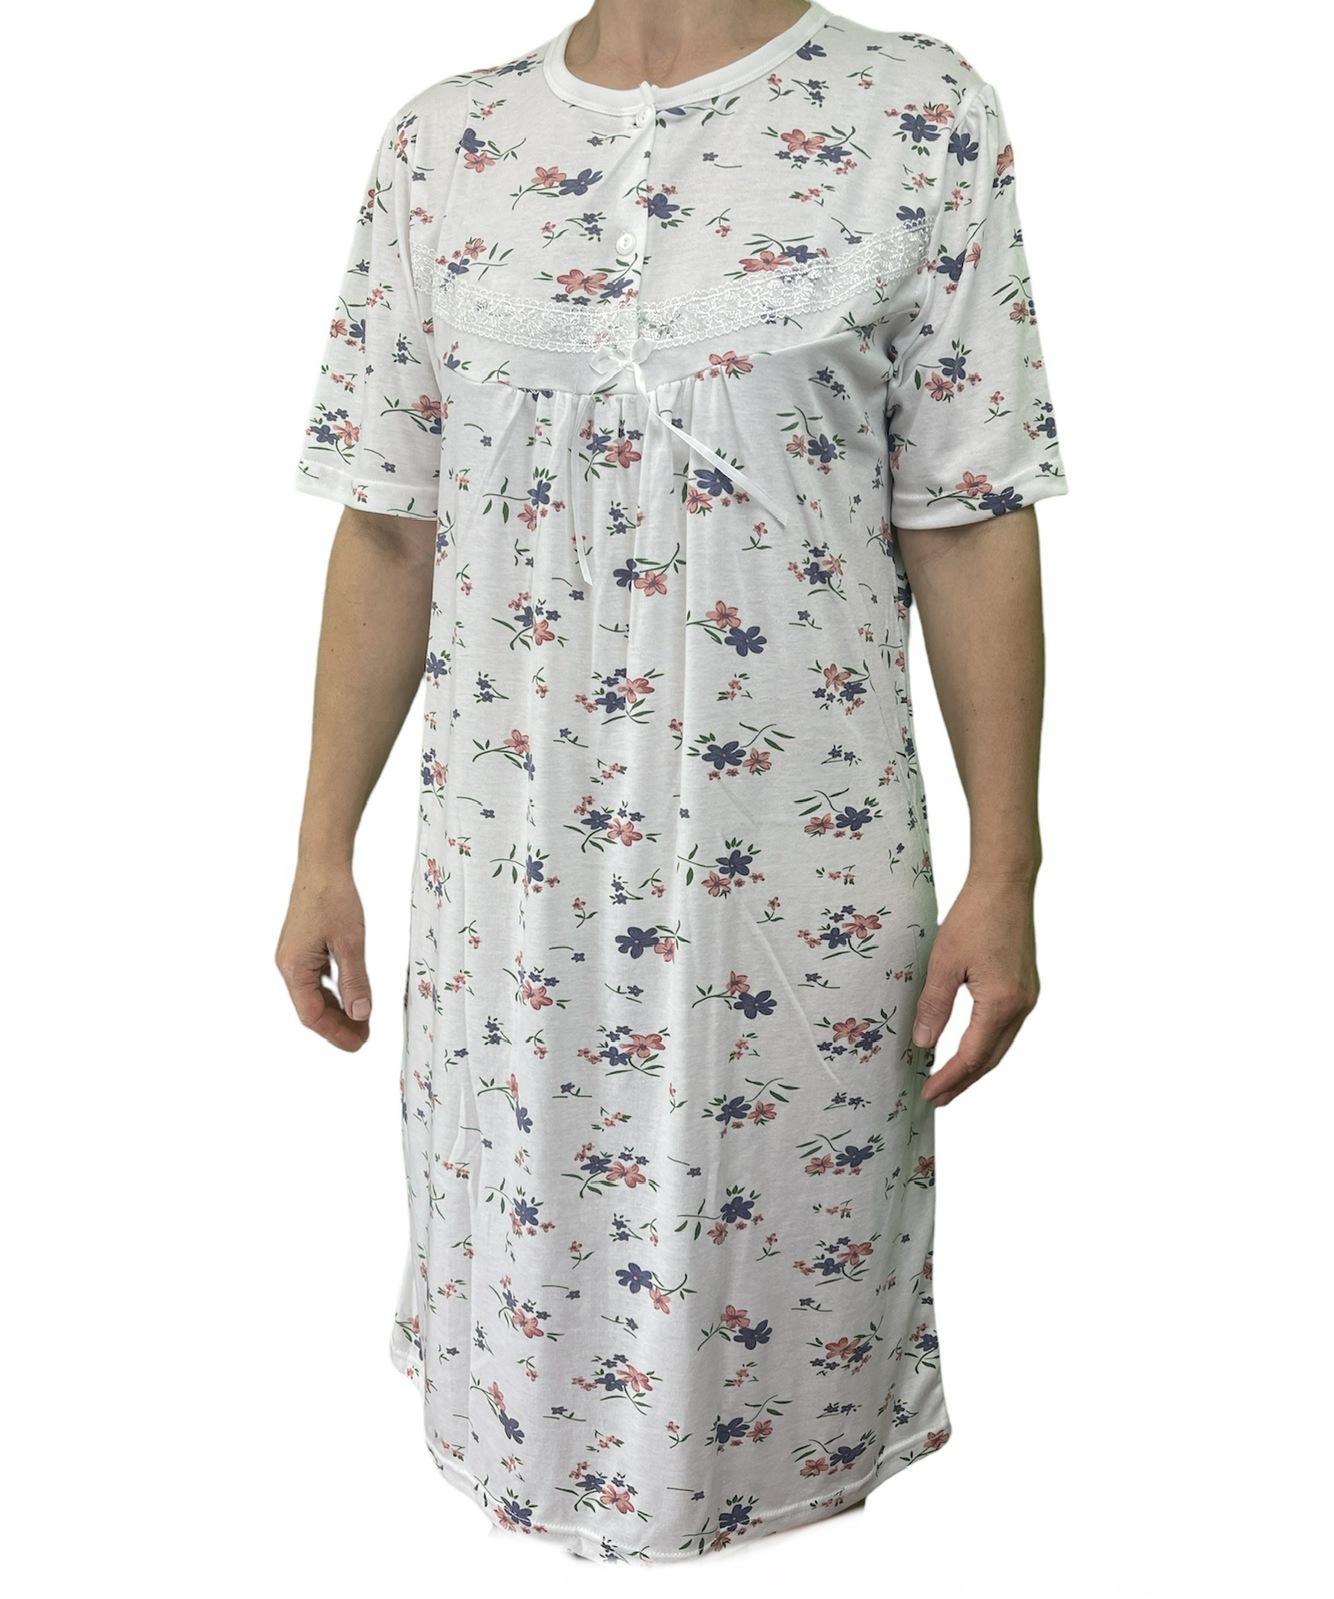 Womens Ladies Cotton Nightie Night Gown Slip Petticoat PJs Sleepwear Dress - White/Pink - 12